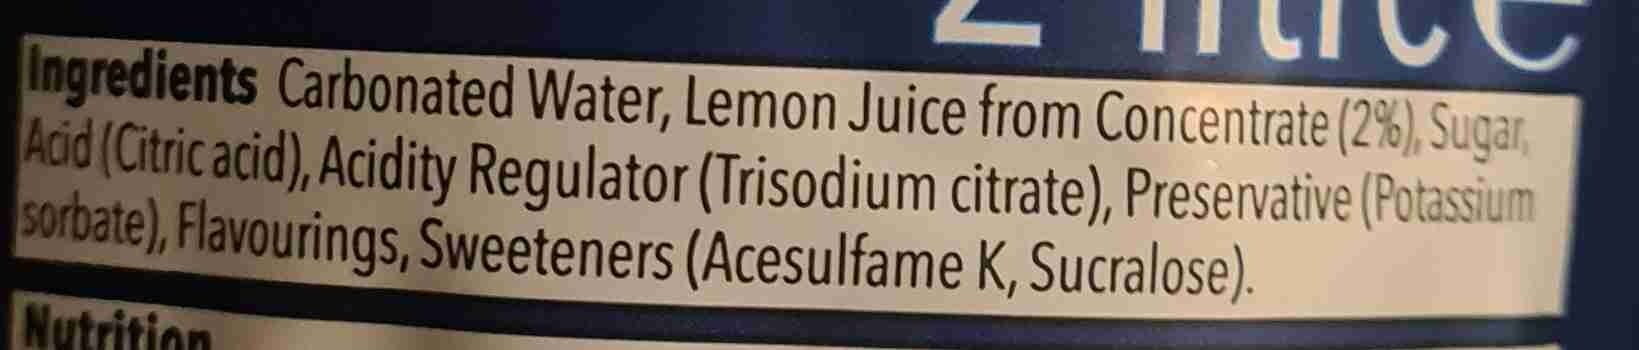 Co-op Sparkling Lemonade 2 Litre - Ingredients